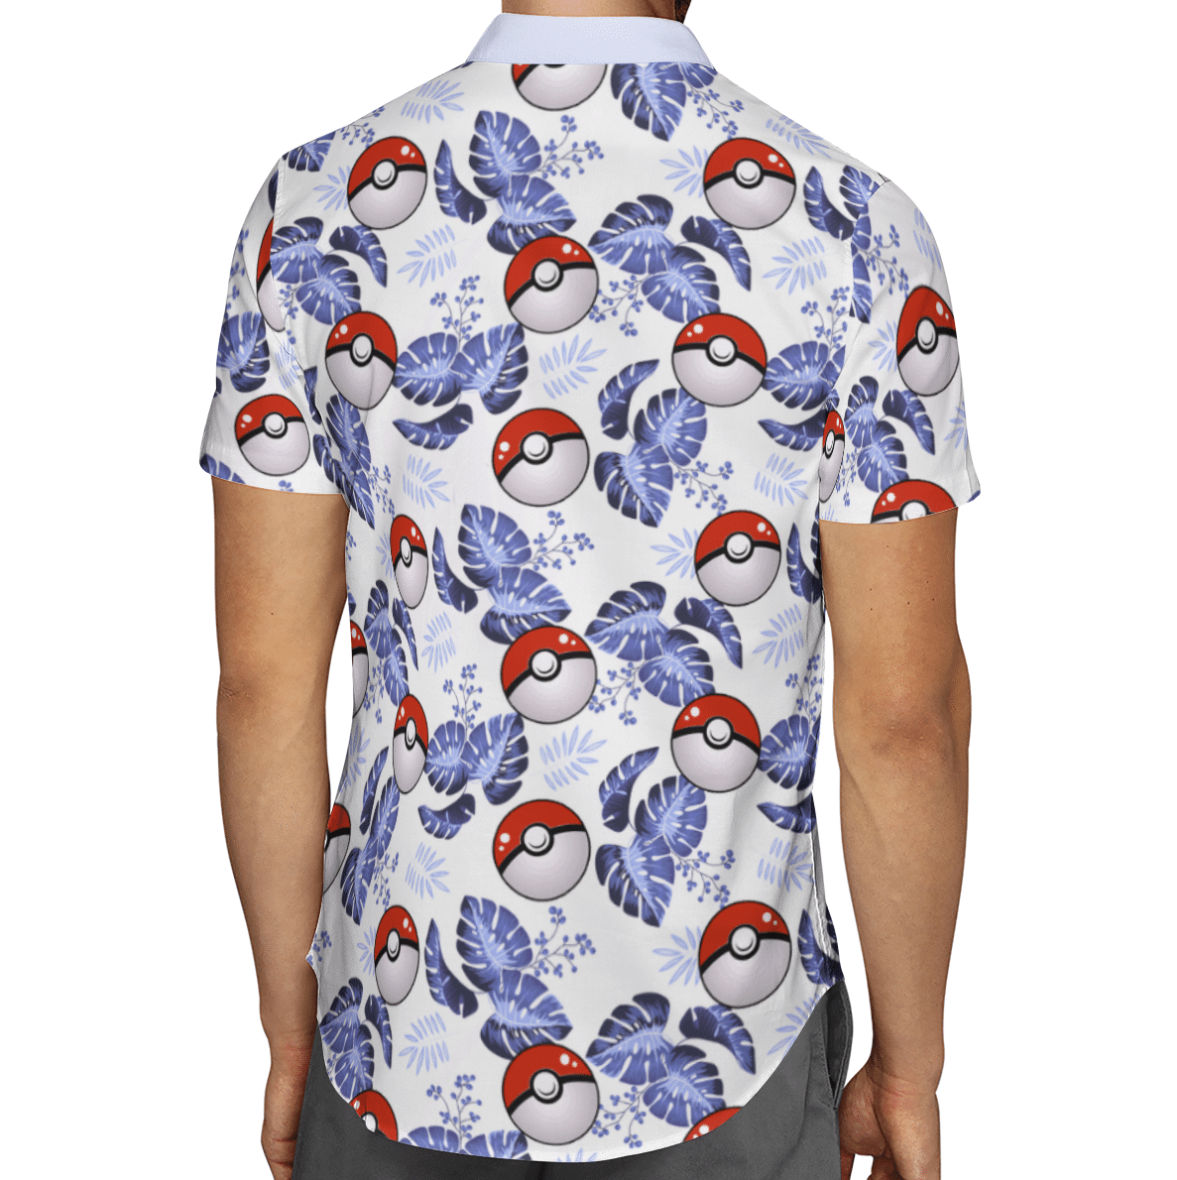 Pokemon Ball Tropical Beach Hawaiian Shirt